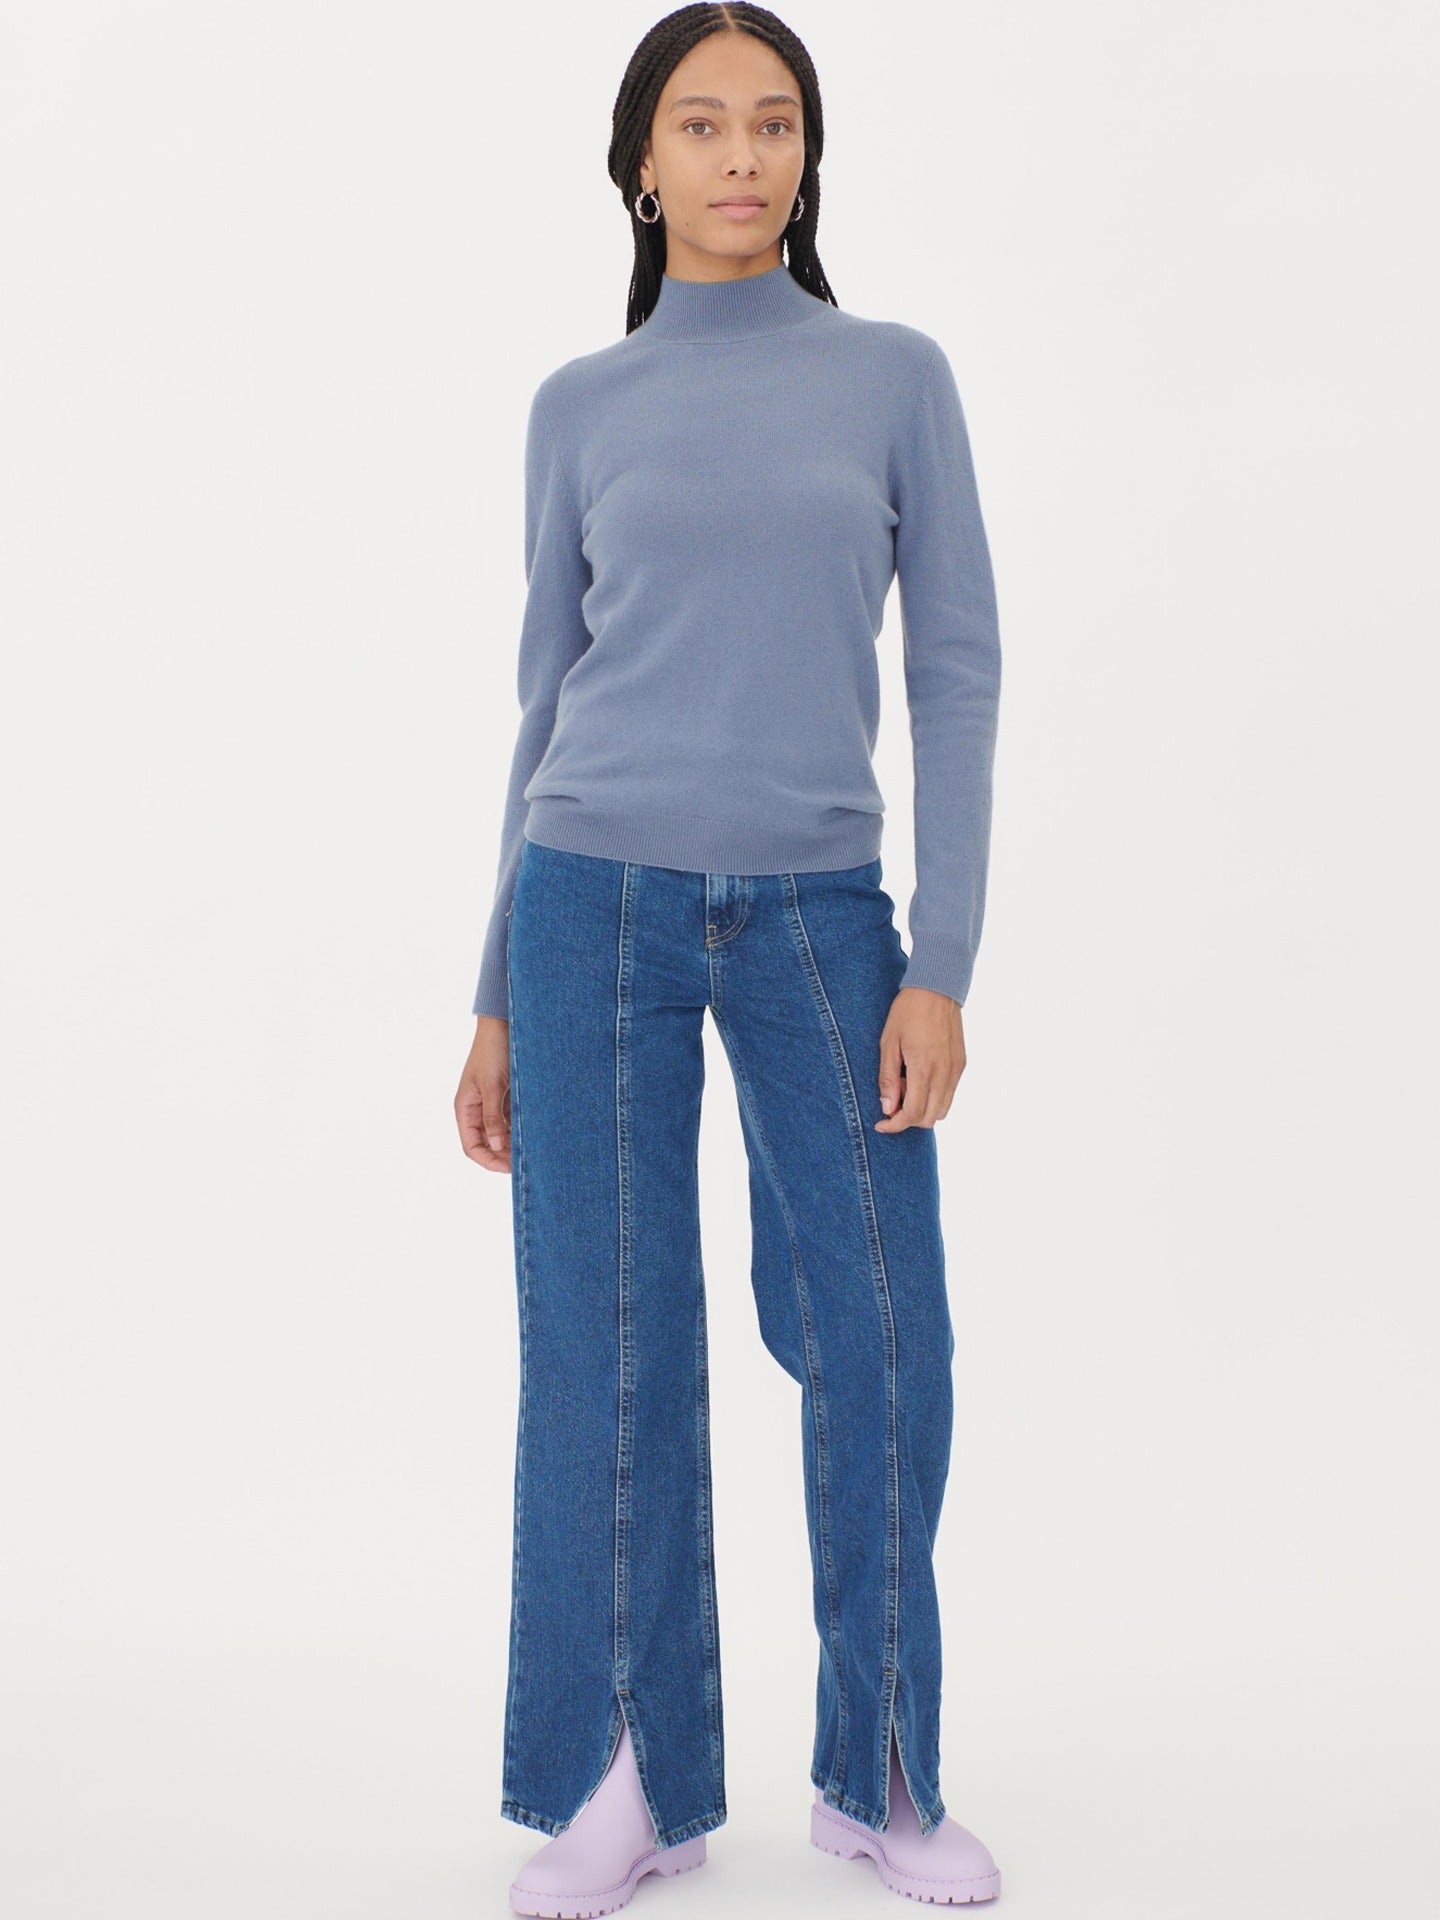 Women's Cashmere Stand-Up Collar Sweater Purple Impression - Gobi Cashmere